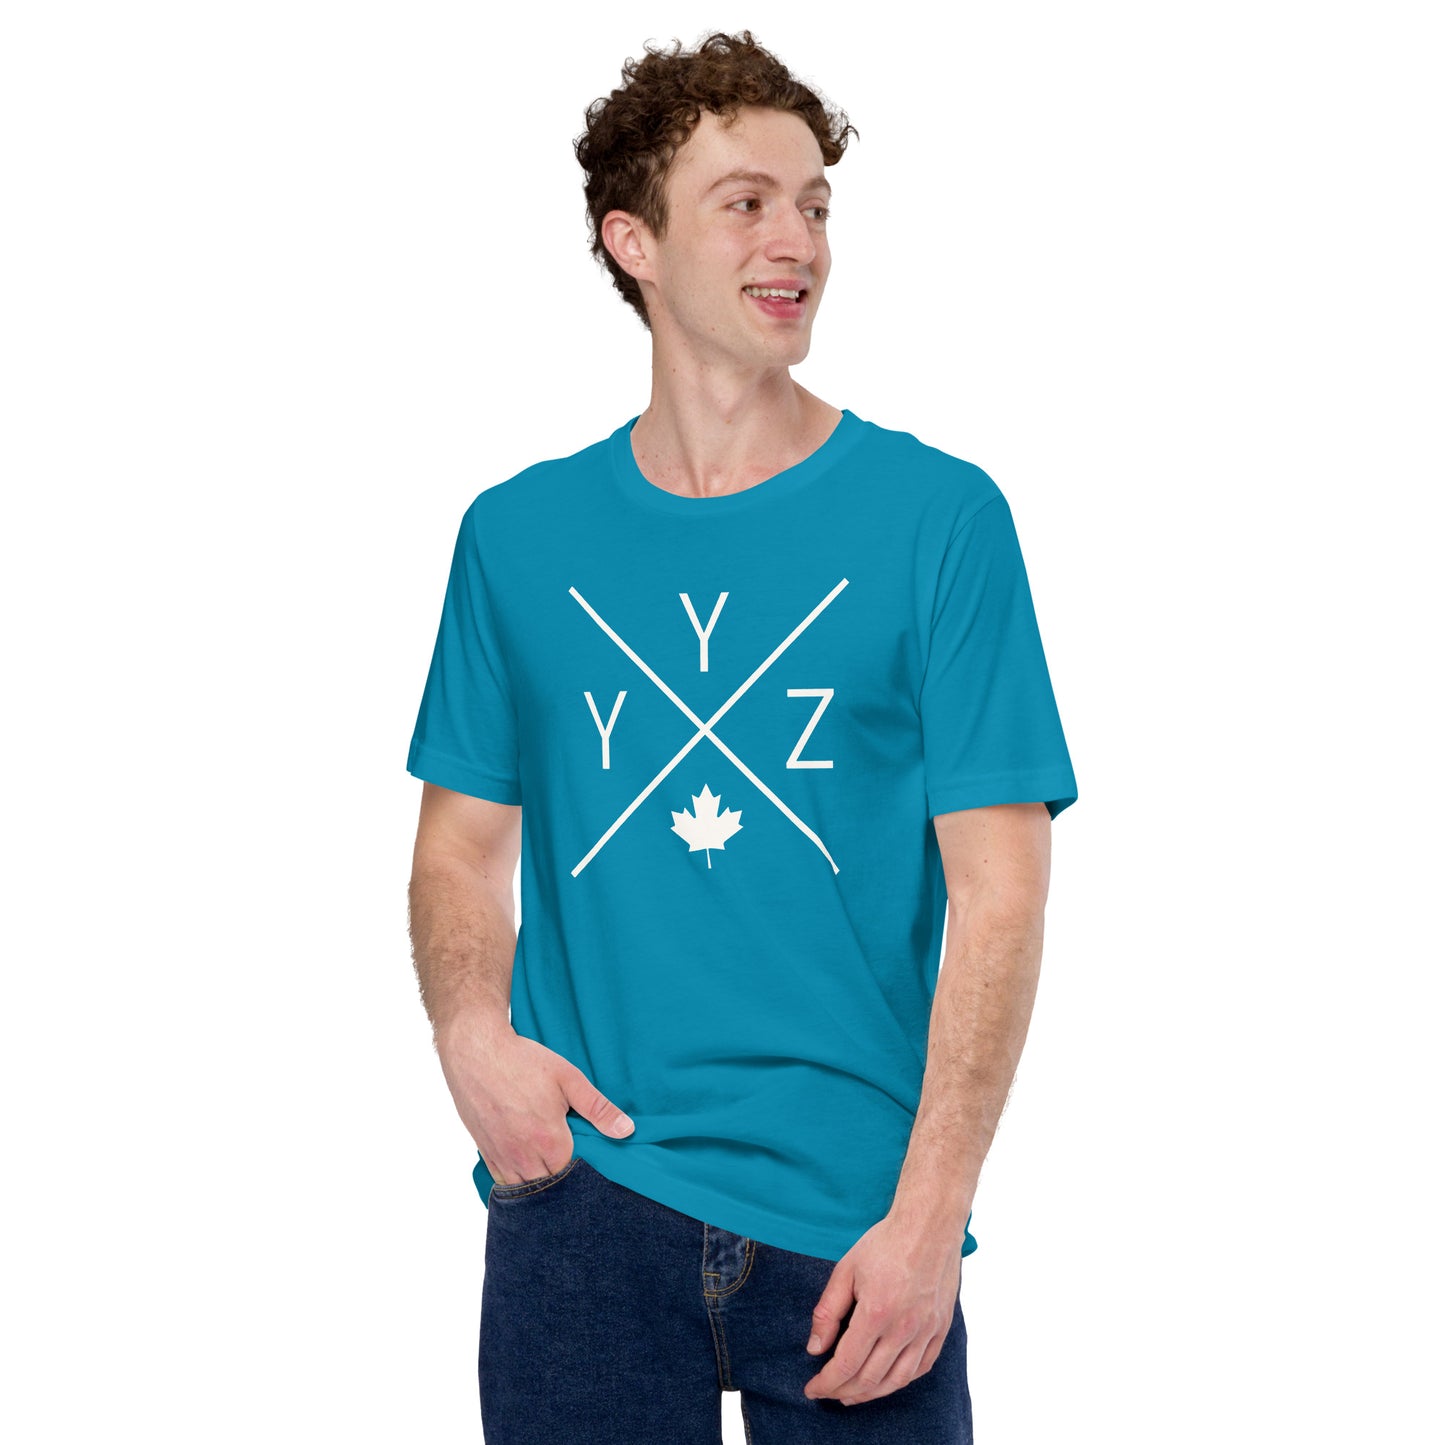 Crossed-X T-Shirt - White Graphic • YYZ Toronto • YHM Designs - Image 11